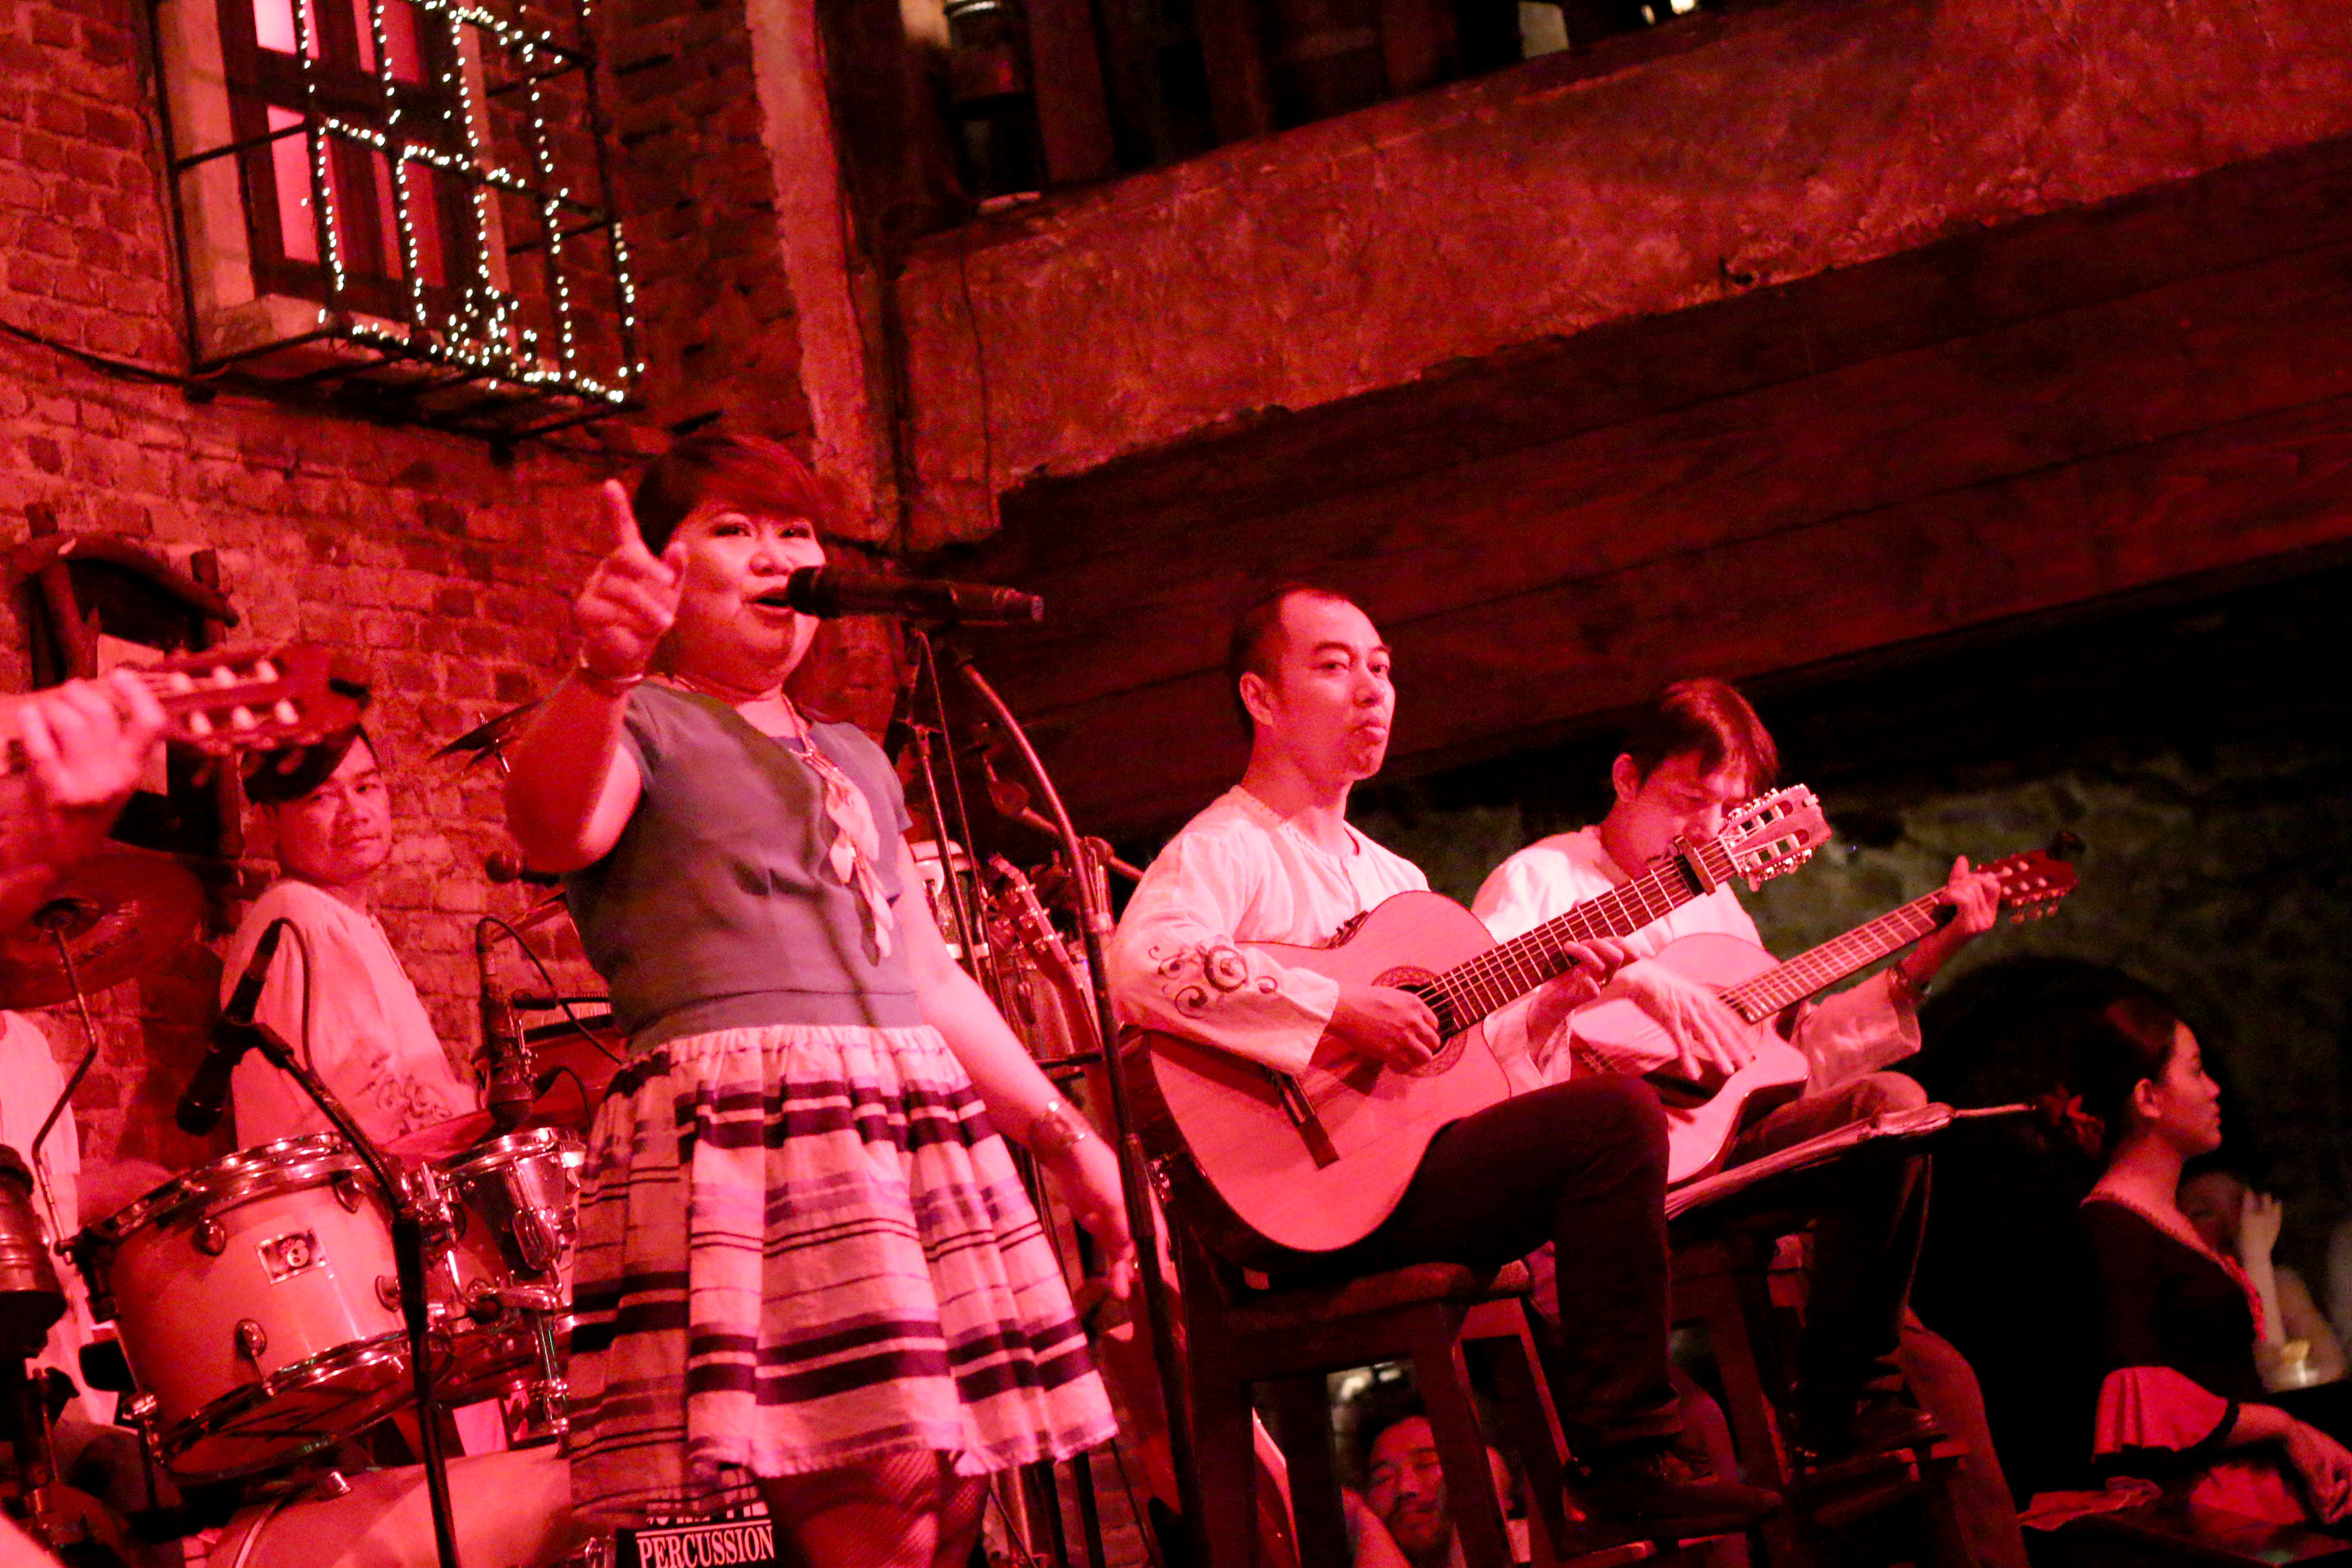 Filipino Clarisse Cantos at Carmen bar. Photo: Tuoi Tre